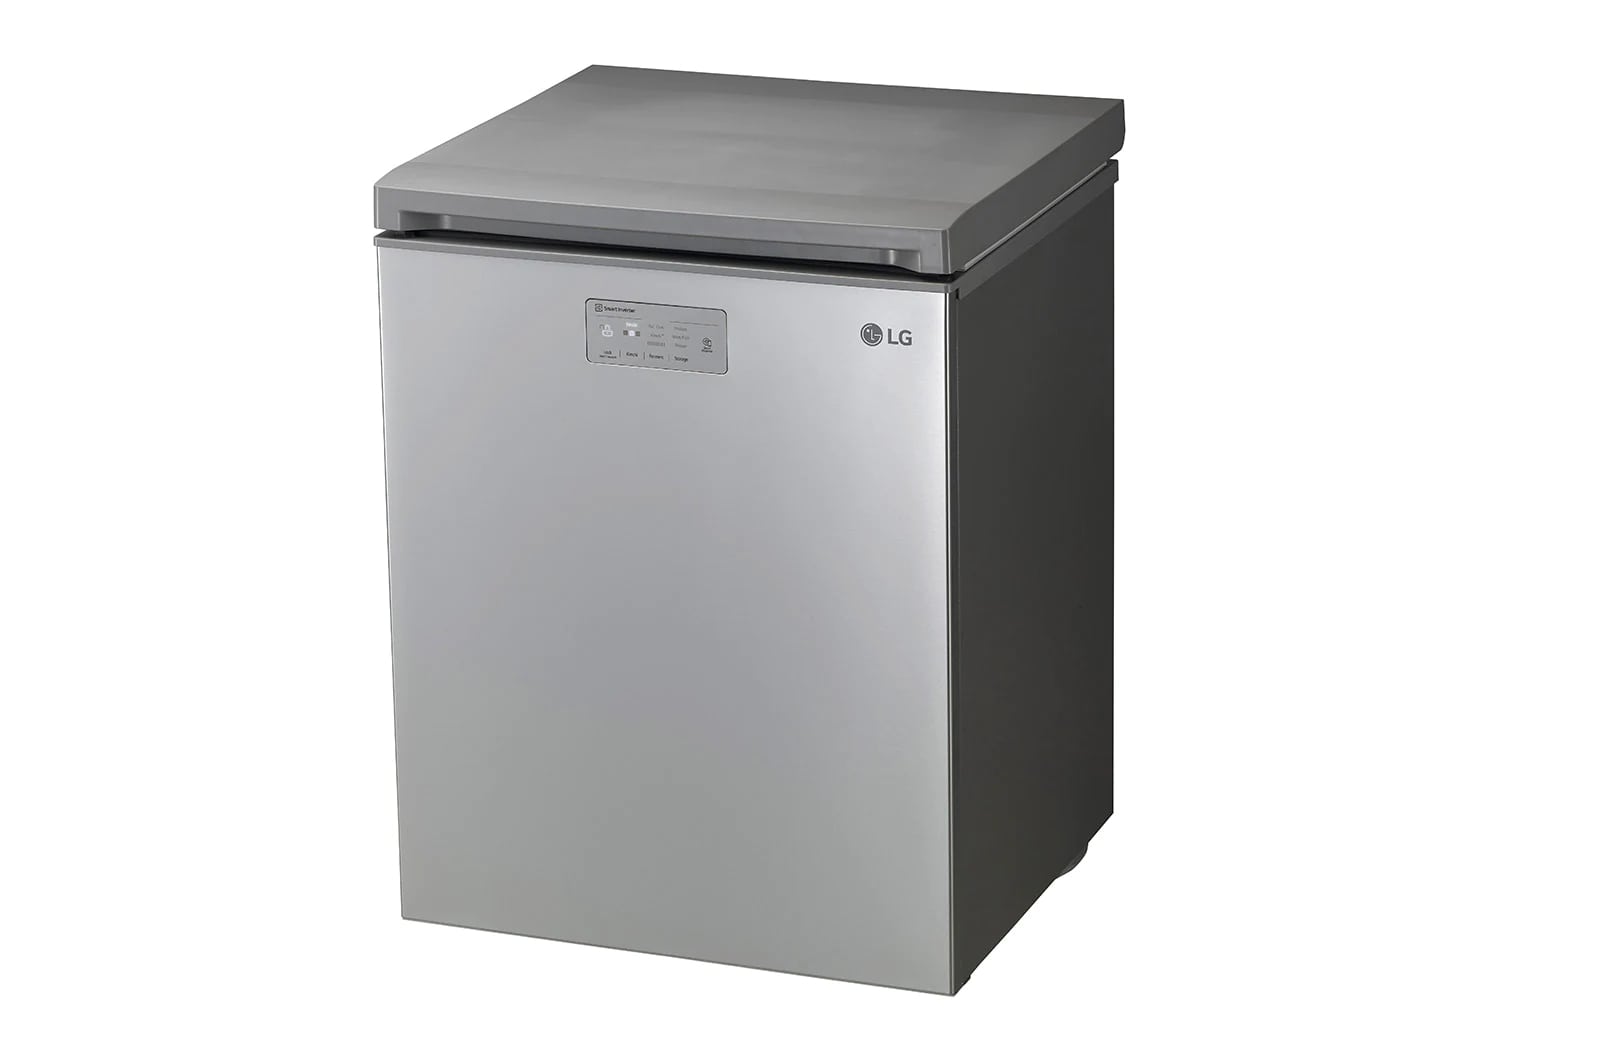 LG - 26.25 Inch 4.5 cu. ft Chest Refrigerator in Silver - LRKNC0505V